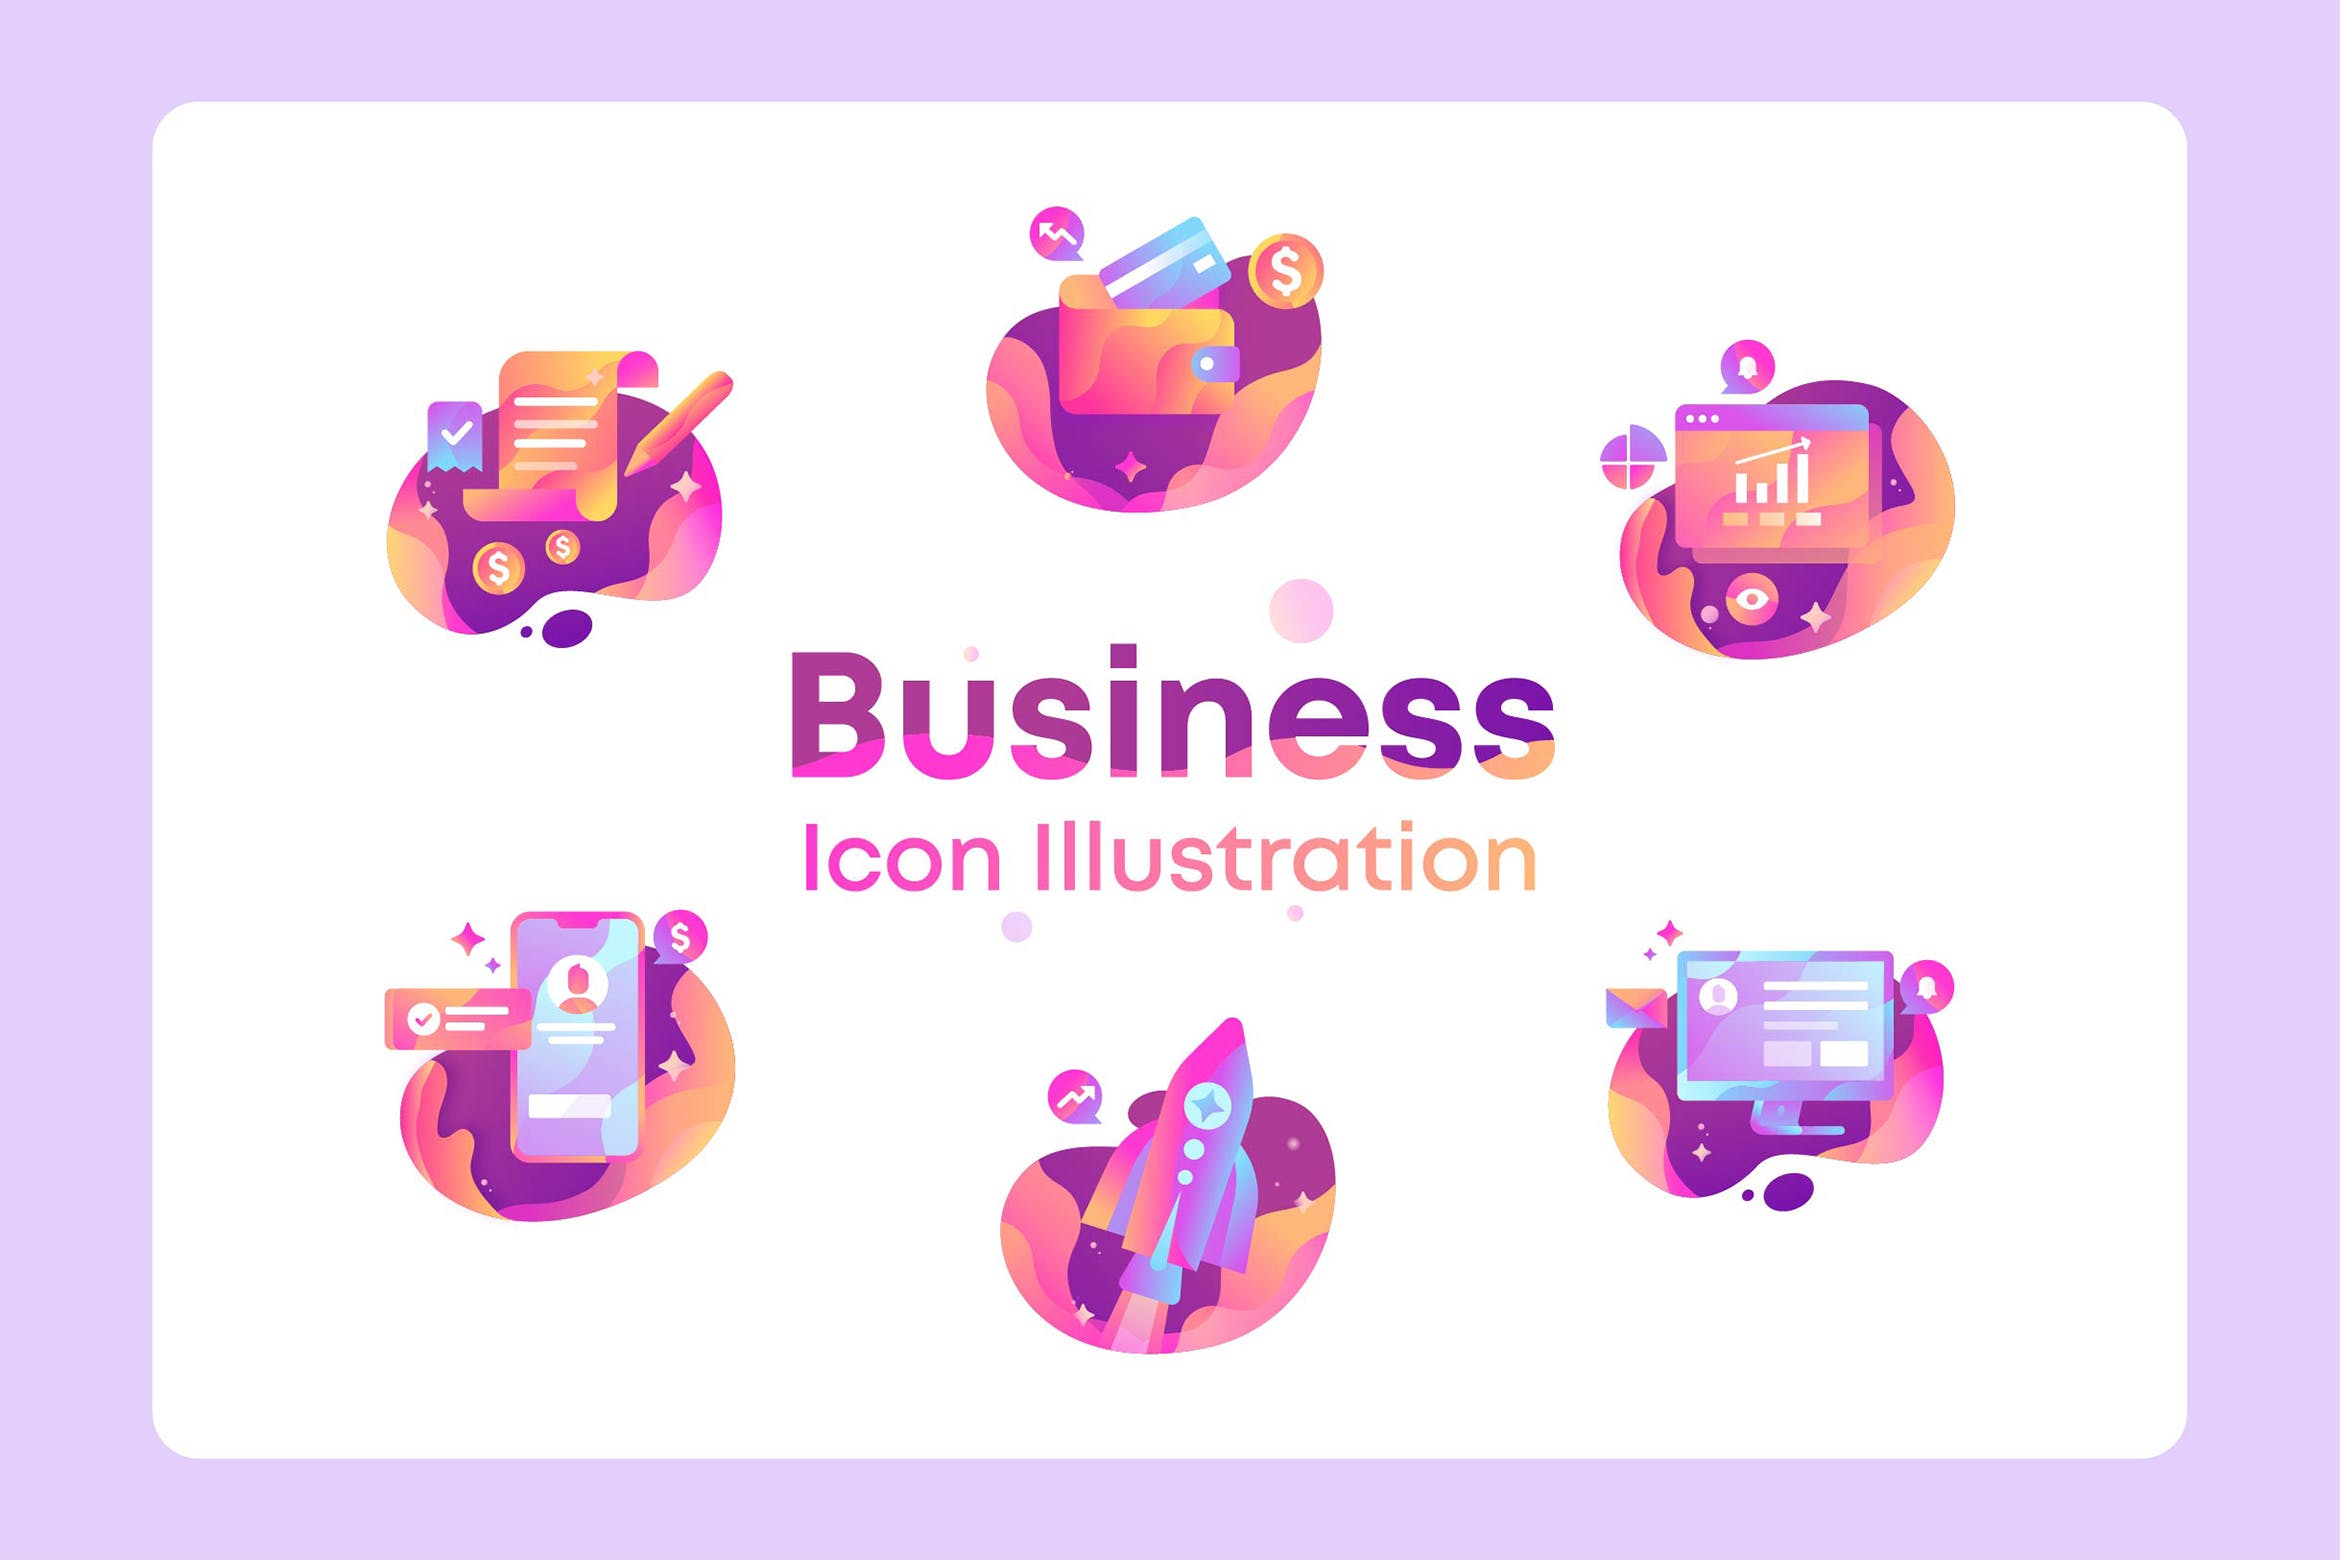 商业/金融/市场营销主题彩色矢量素材库精选图标 Business, Finance, marketing Icon Illustration插图